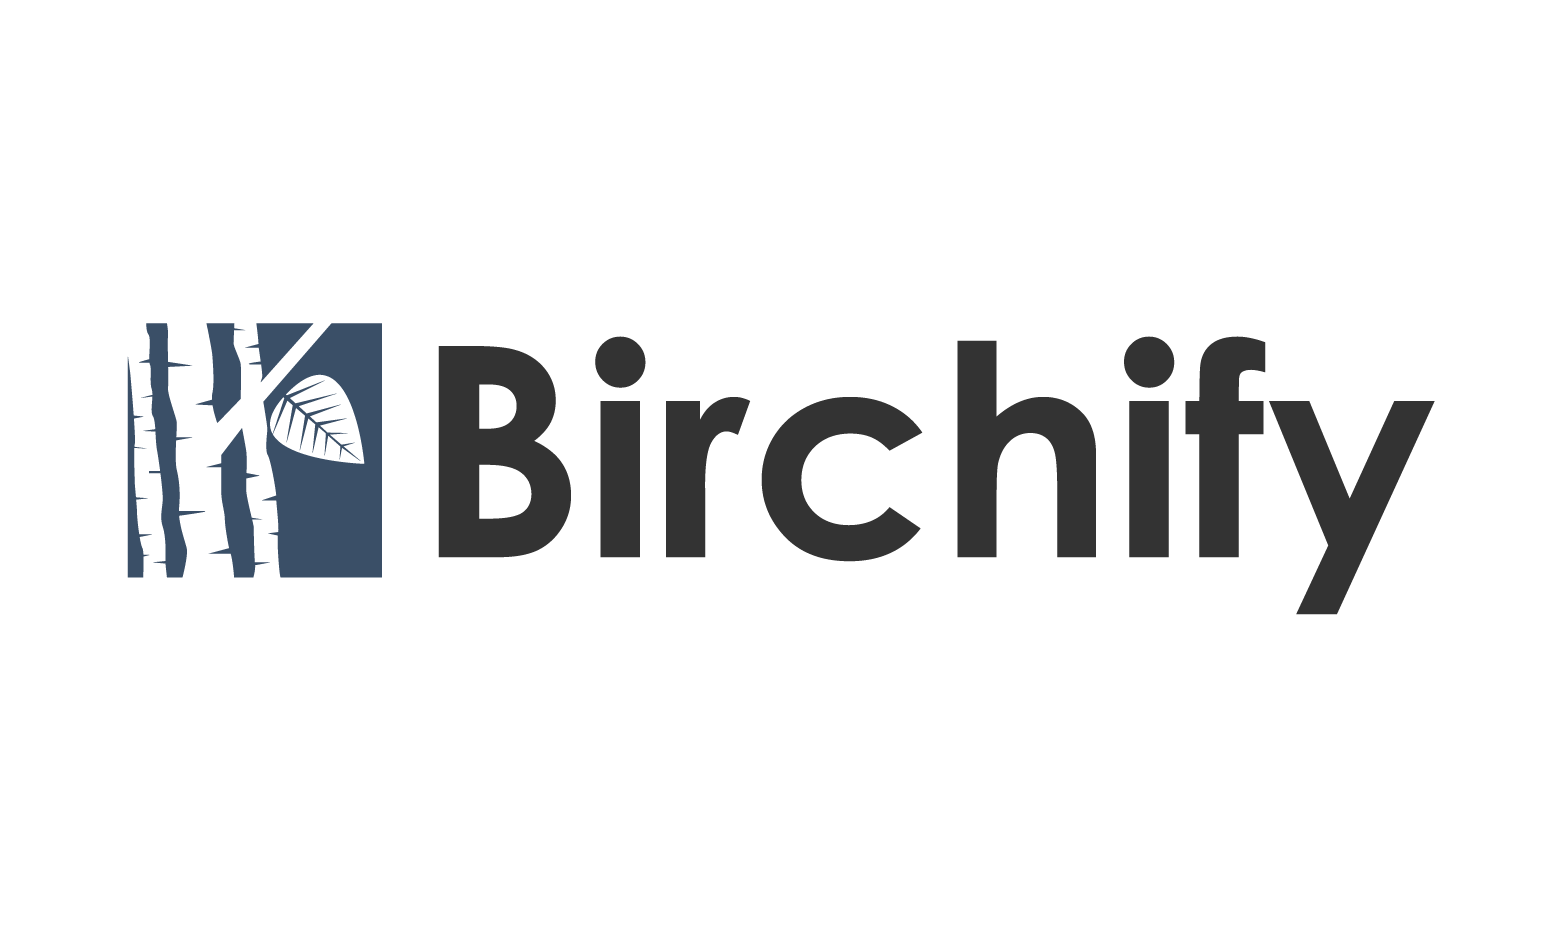 Birchify.com - Creative brandable domain for sale